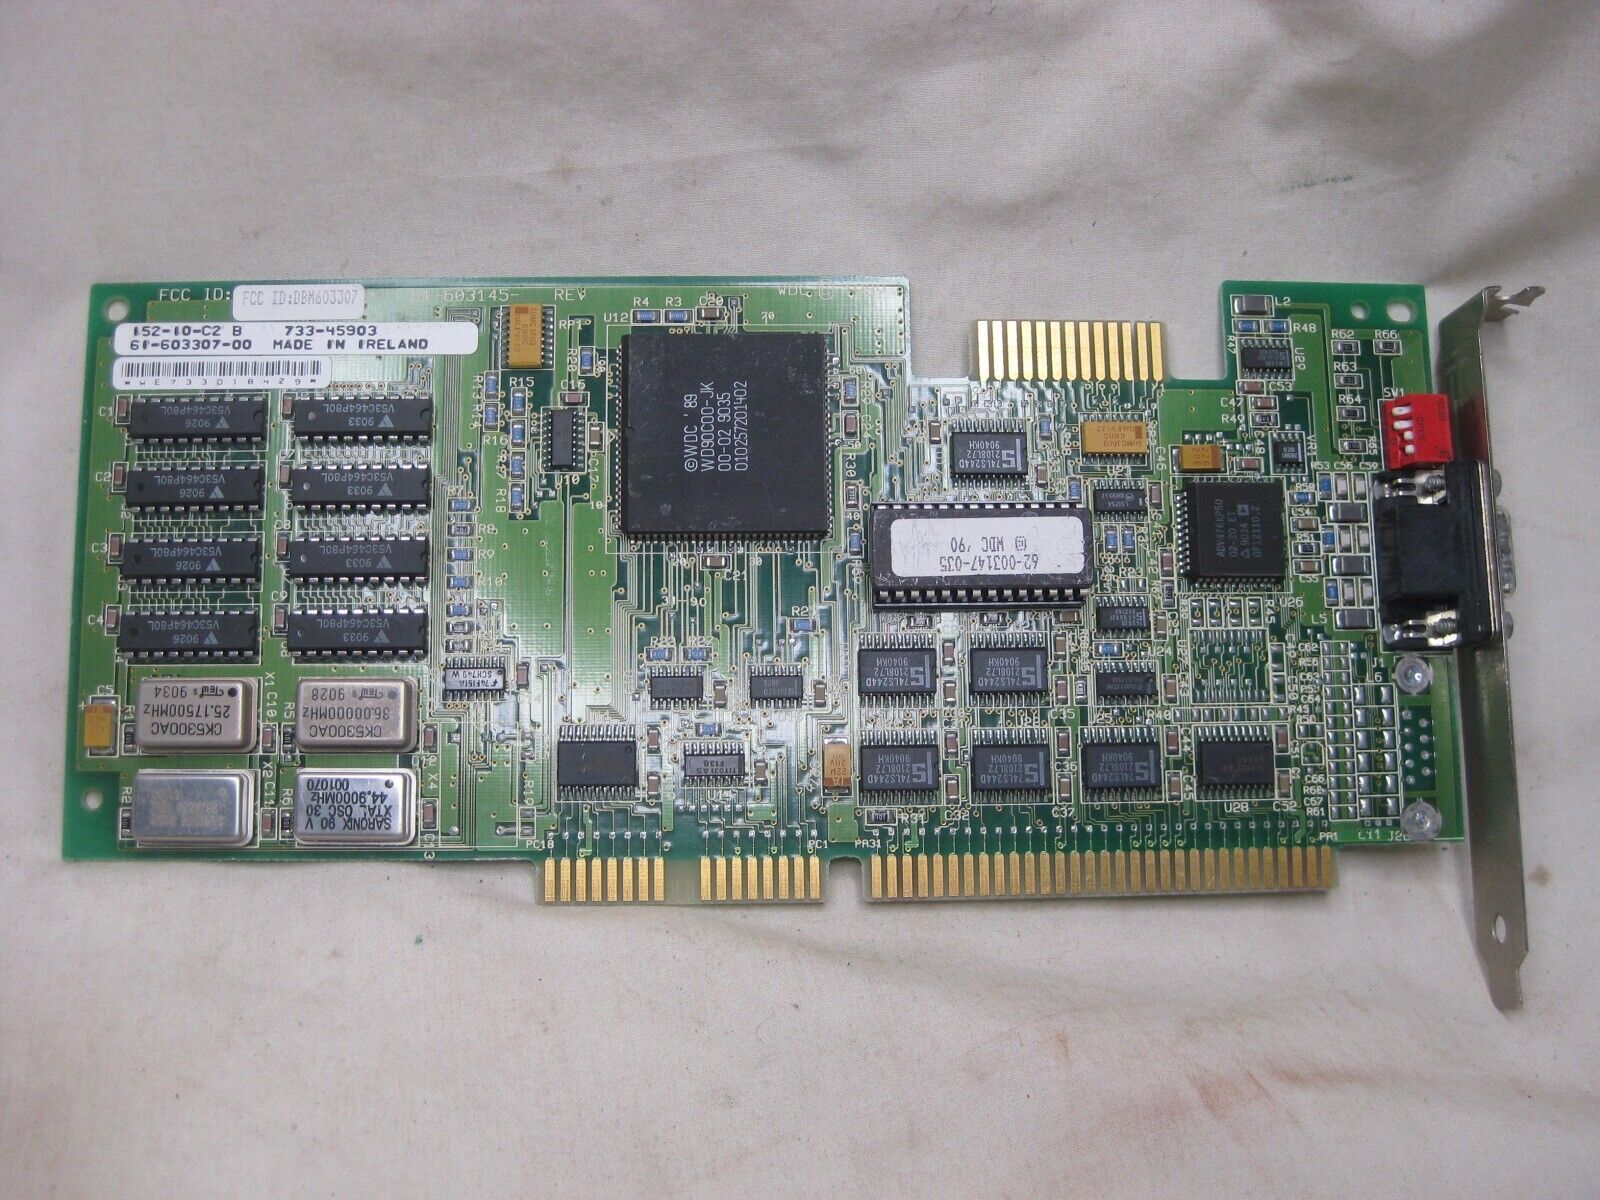 vintage VGA Video Graphics Control card WDC 1989 DBM603307 152-10-C2 733-45903